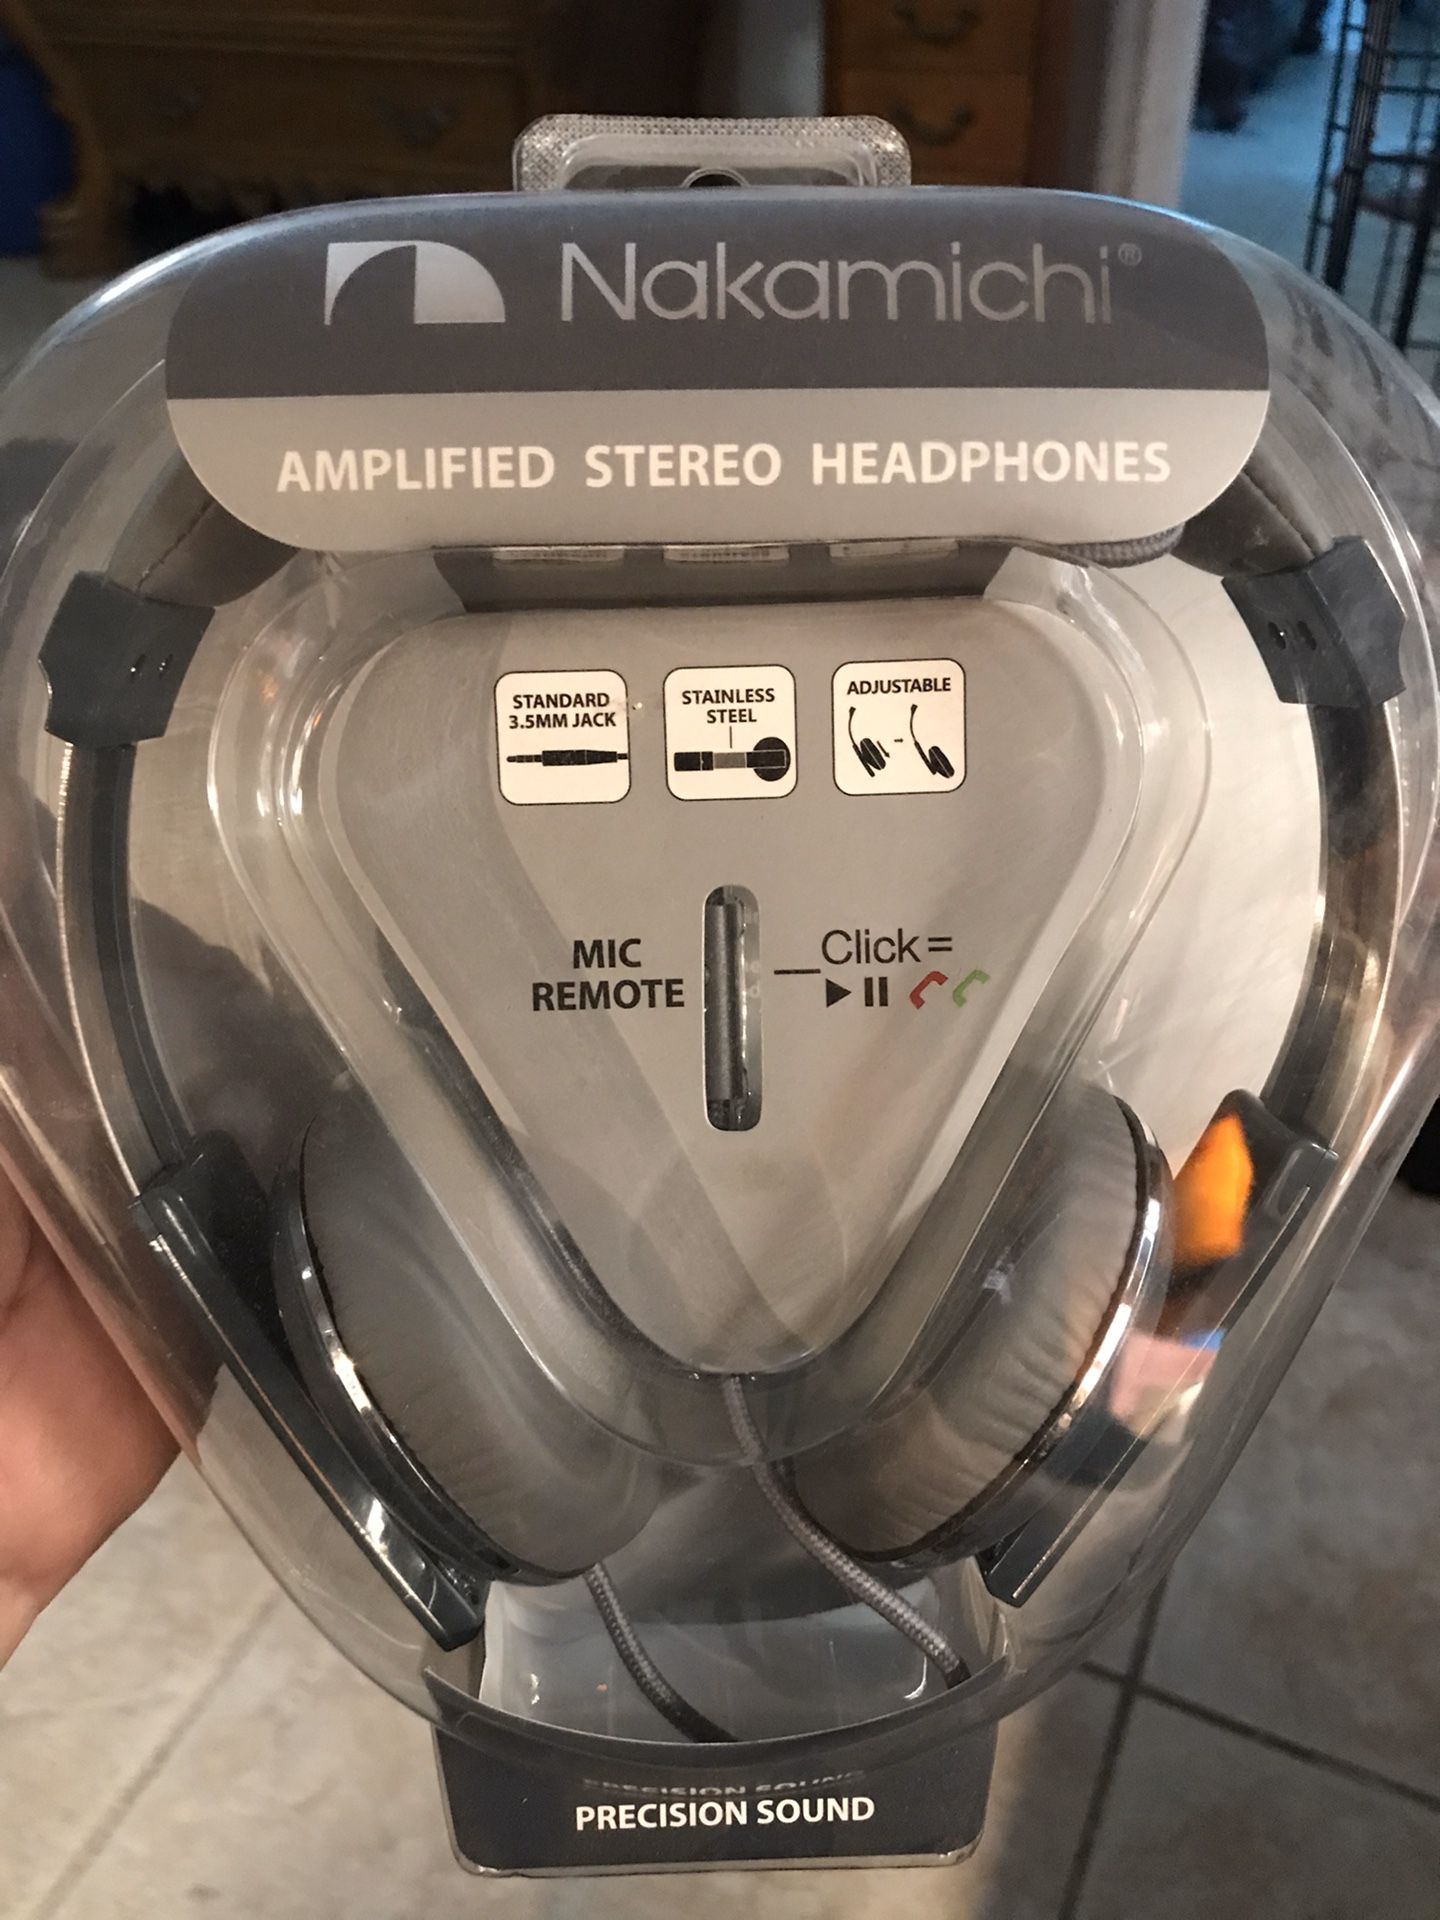 Nakamichi headphones- brand new sealed package